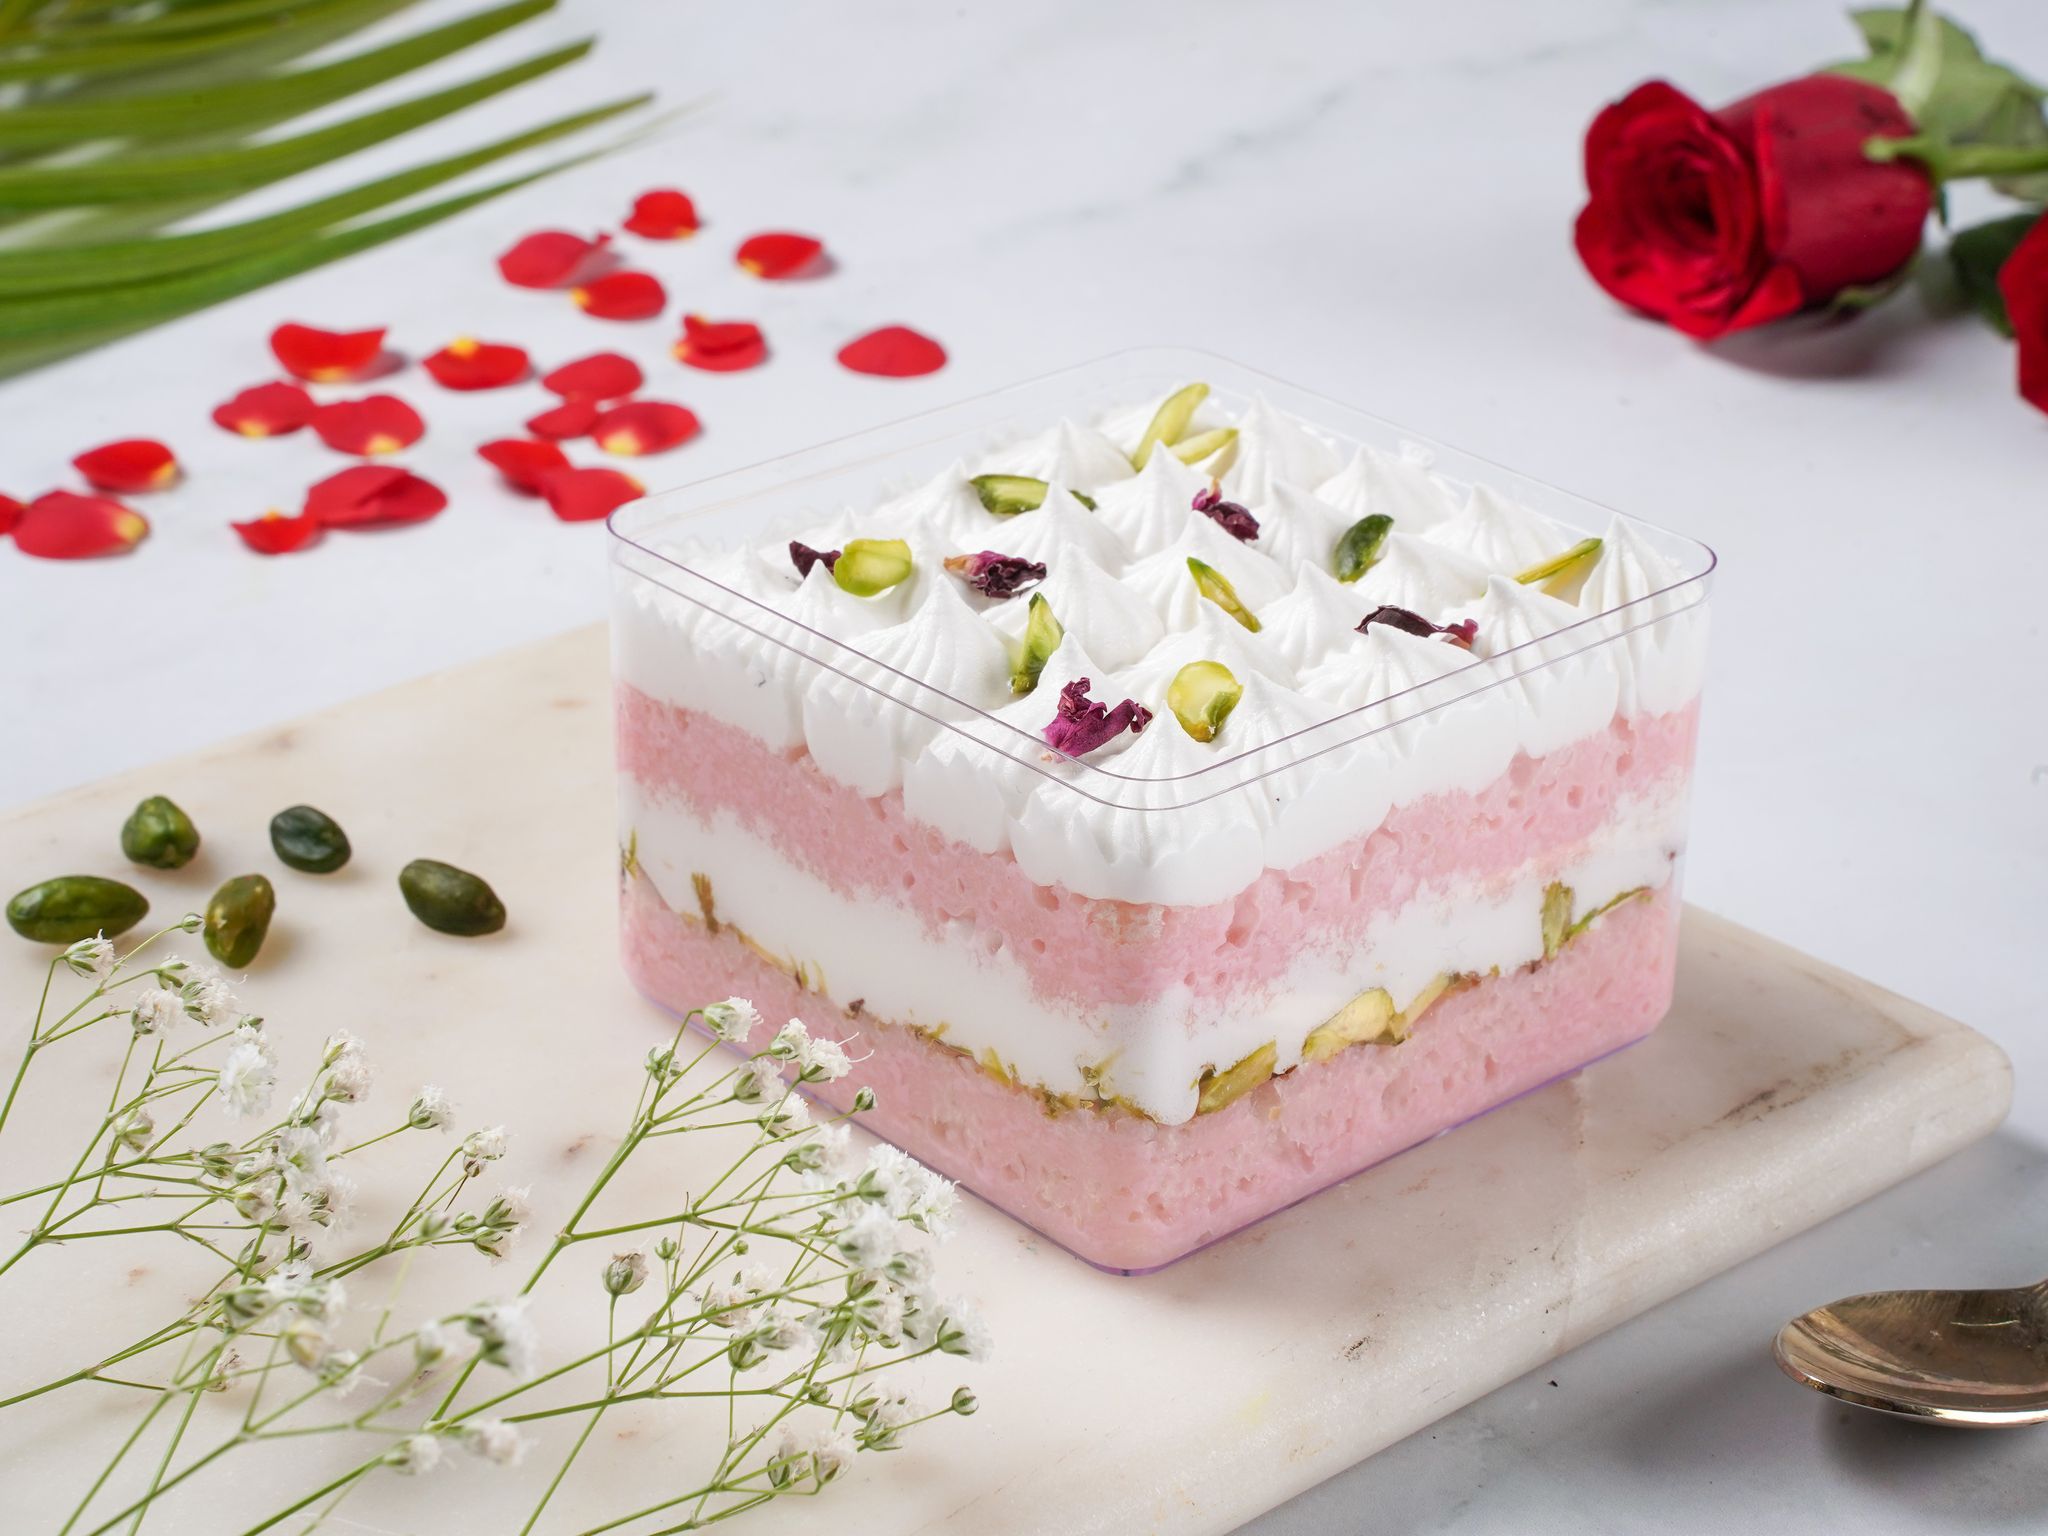 Rose and Pistachio Milk Cake Recipe - The Oxford Magazine